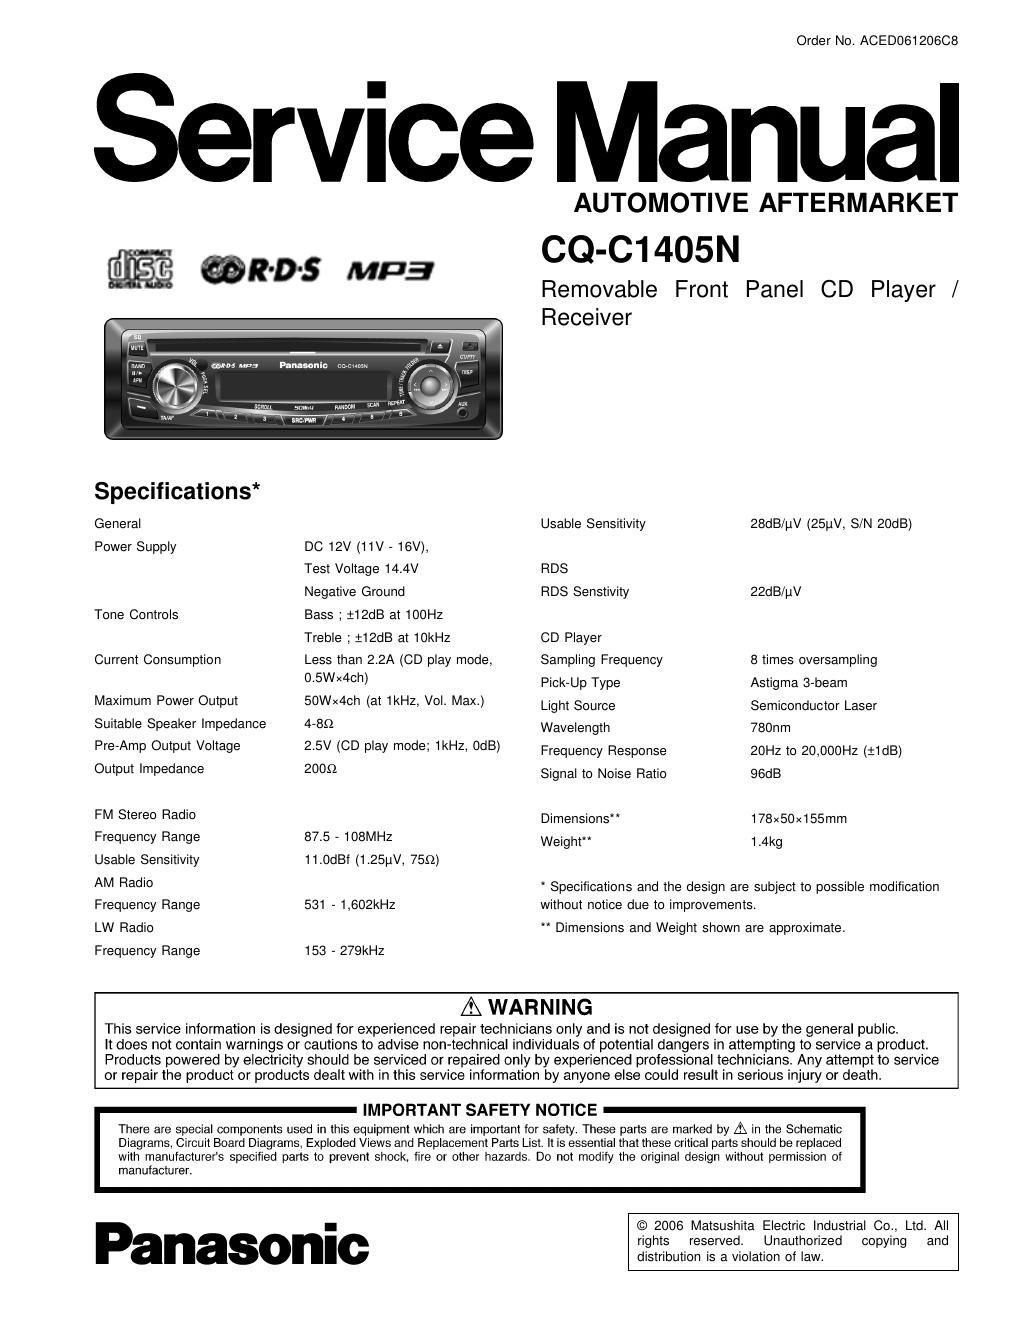 panasonic cq c 1405 n service manual